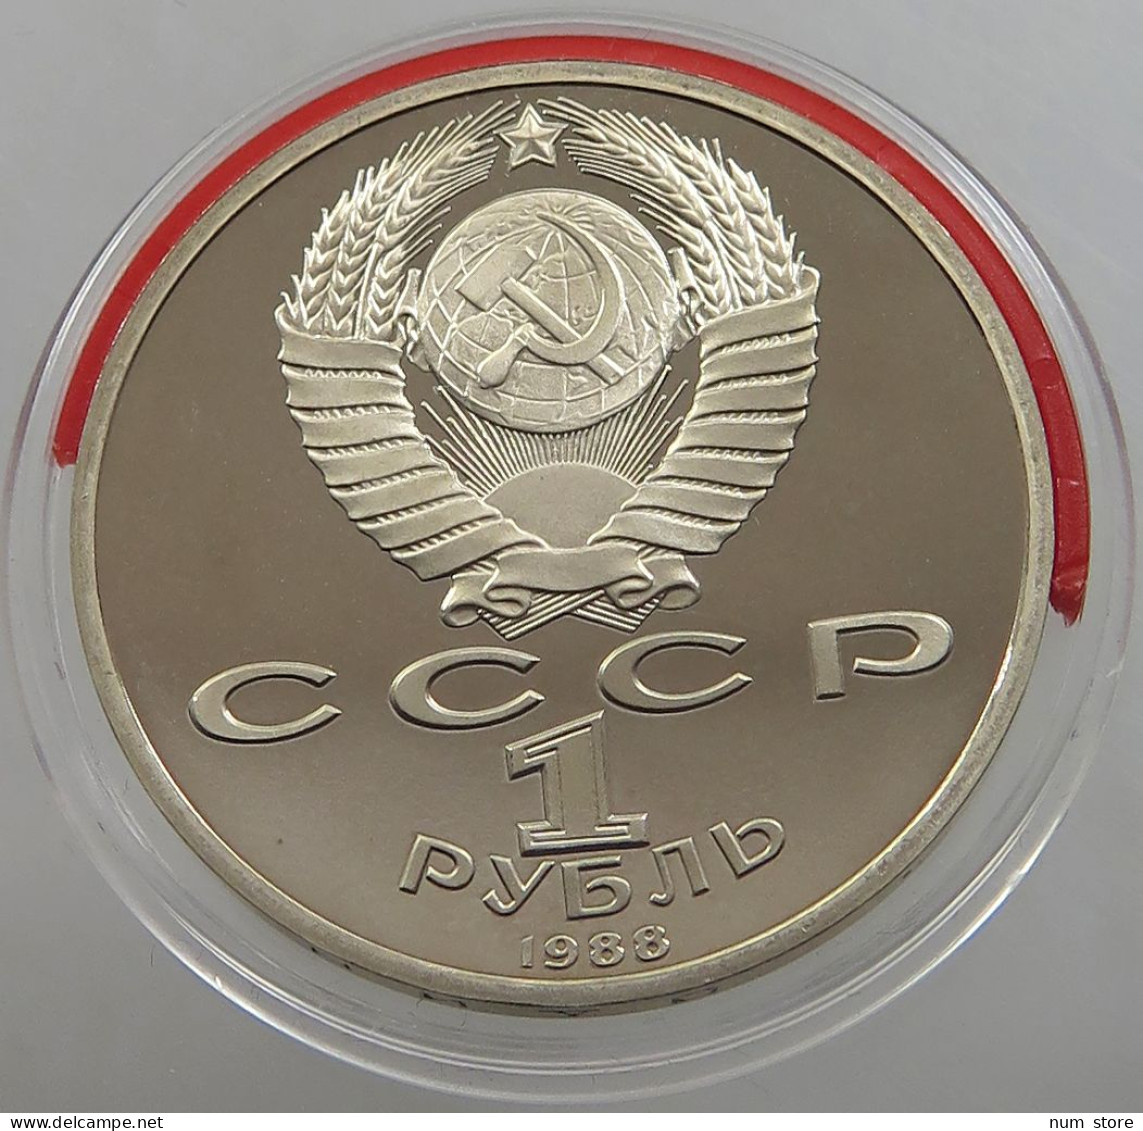 RUSSIA USSR 1 ROUBLE 1988 GORKI PROOF #sm14 0529 - Russia